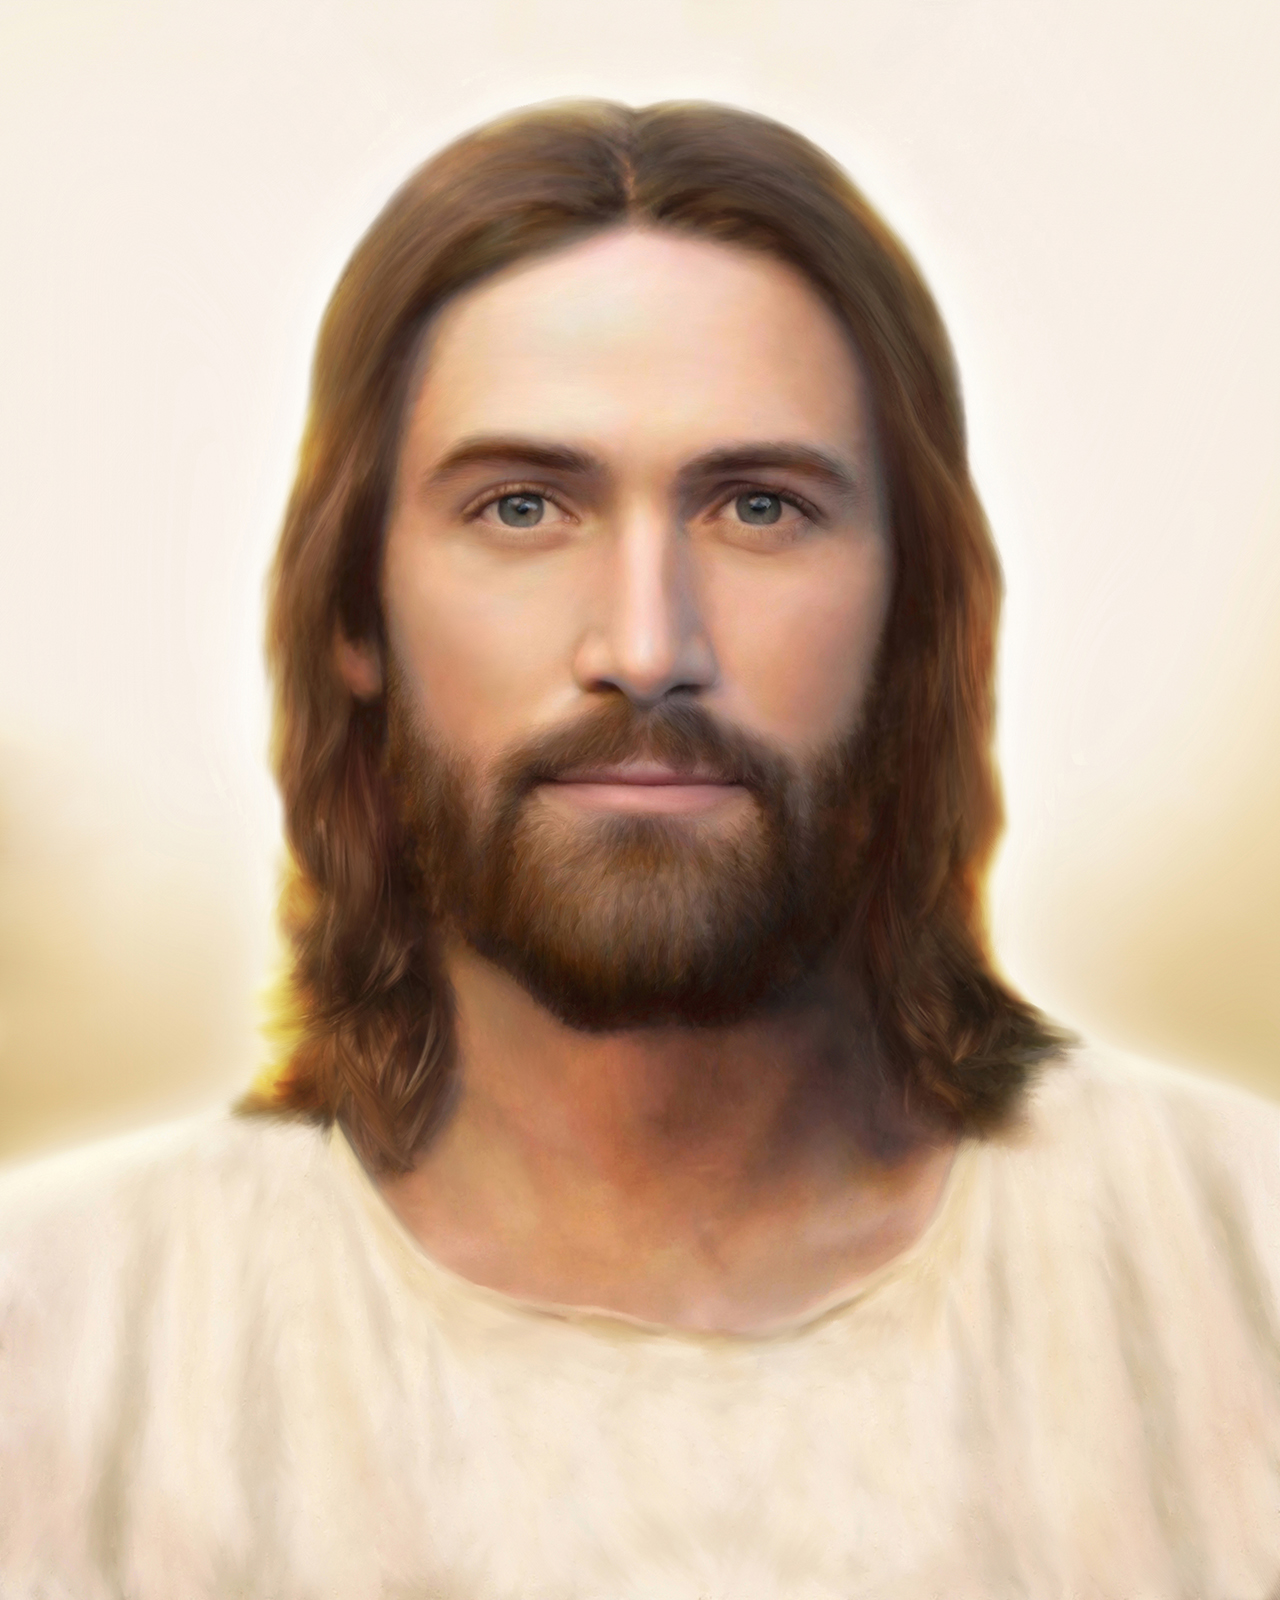 Principles of Jesus Christ: The Sacred Life and Mission of Jesus Christ ...